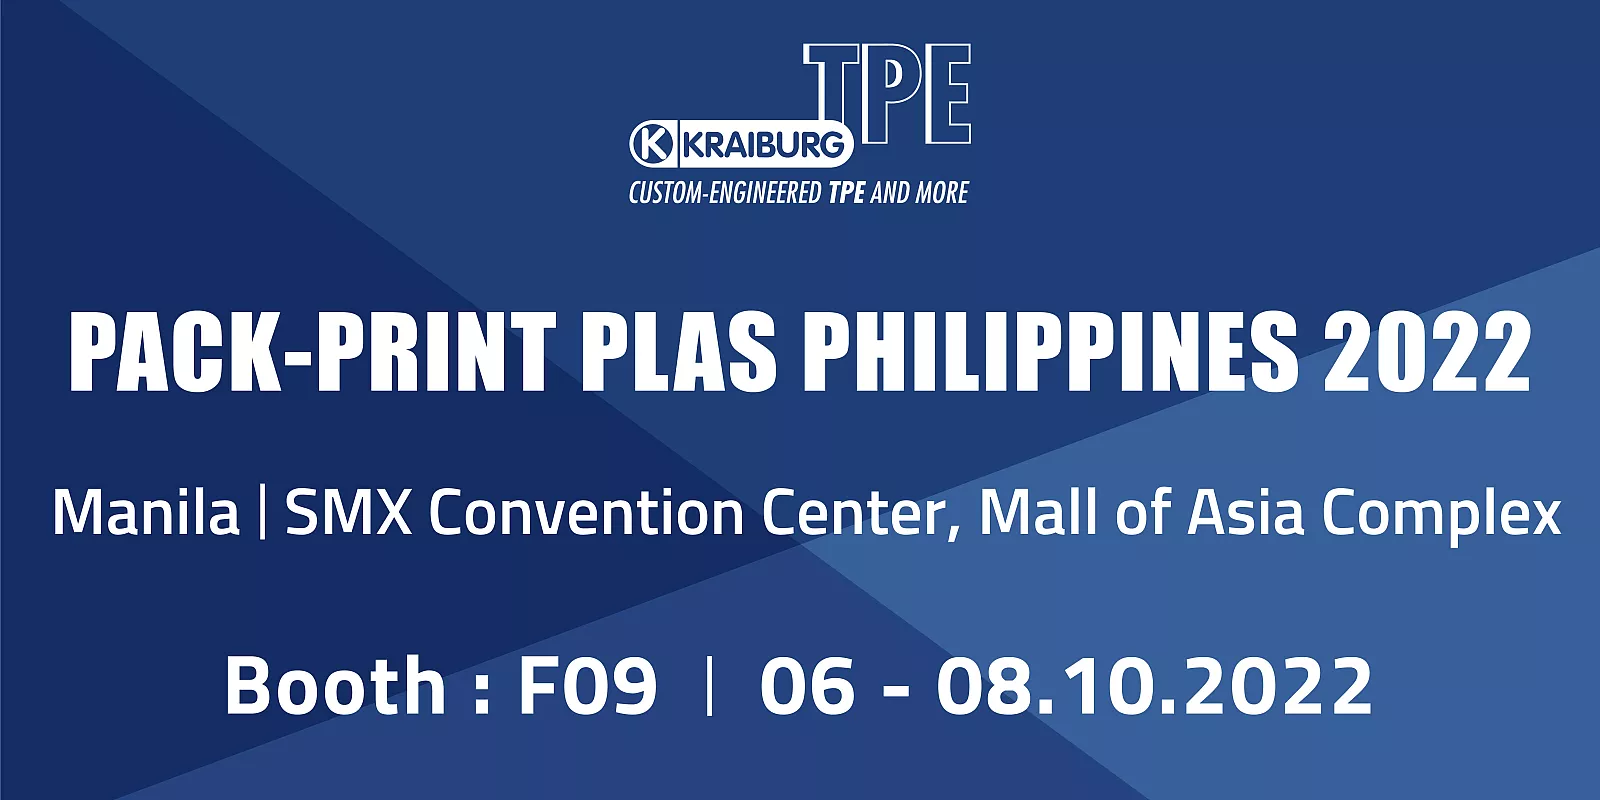 KRAIBURG TPE นำเสนอโซลูชันวัสดุfood grade ที่มีคุณภาพสำหรับผู้บริโภคและบรรจุภัณฑ์ทางการแพทย์และการดูแลสุขภาพ พบการที่งาน PACK-PRINT PLAS Philippines 2022